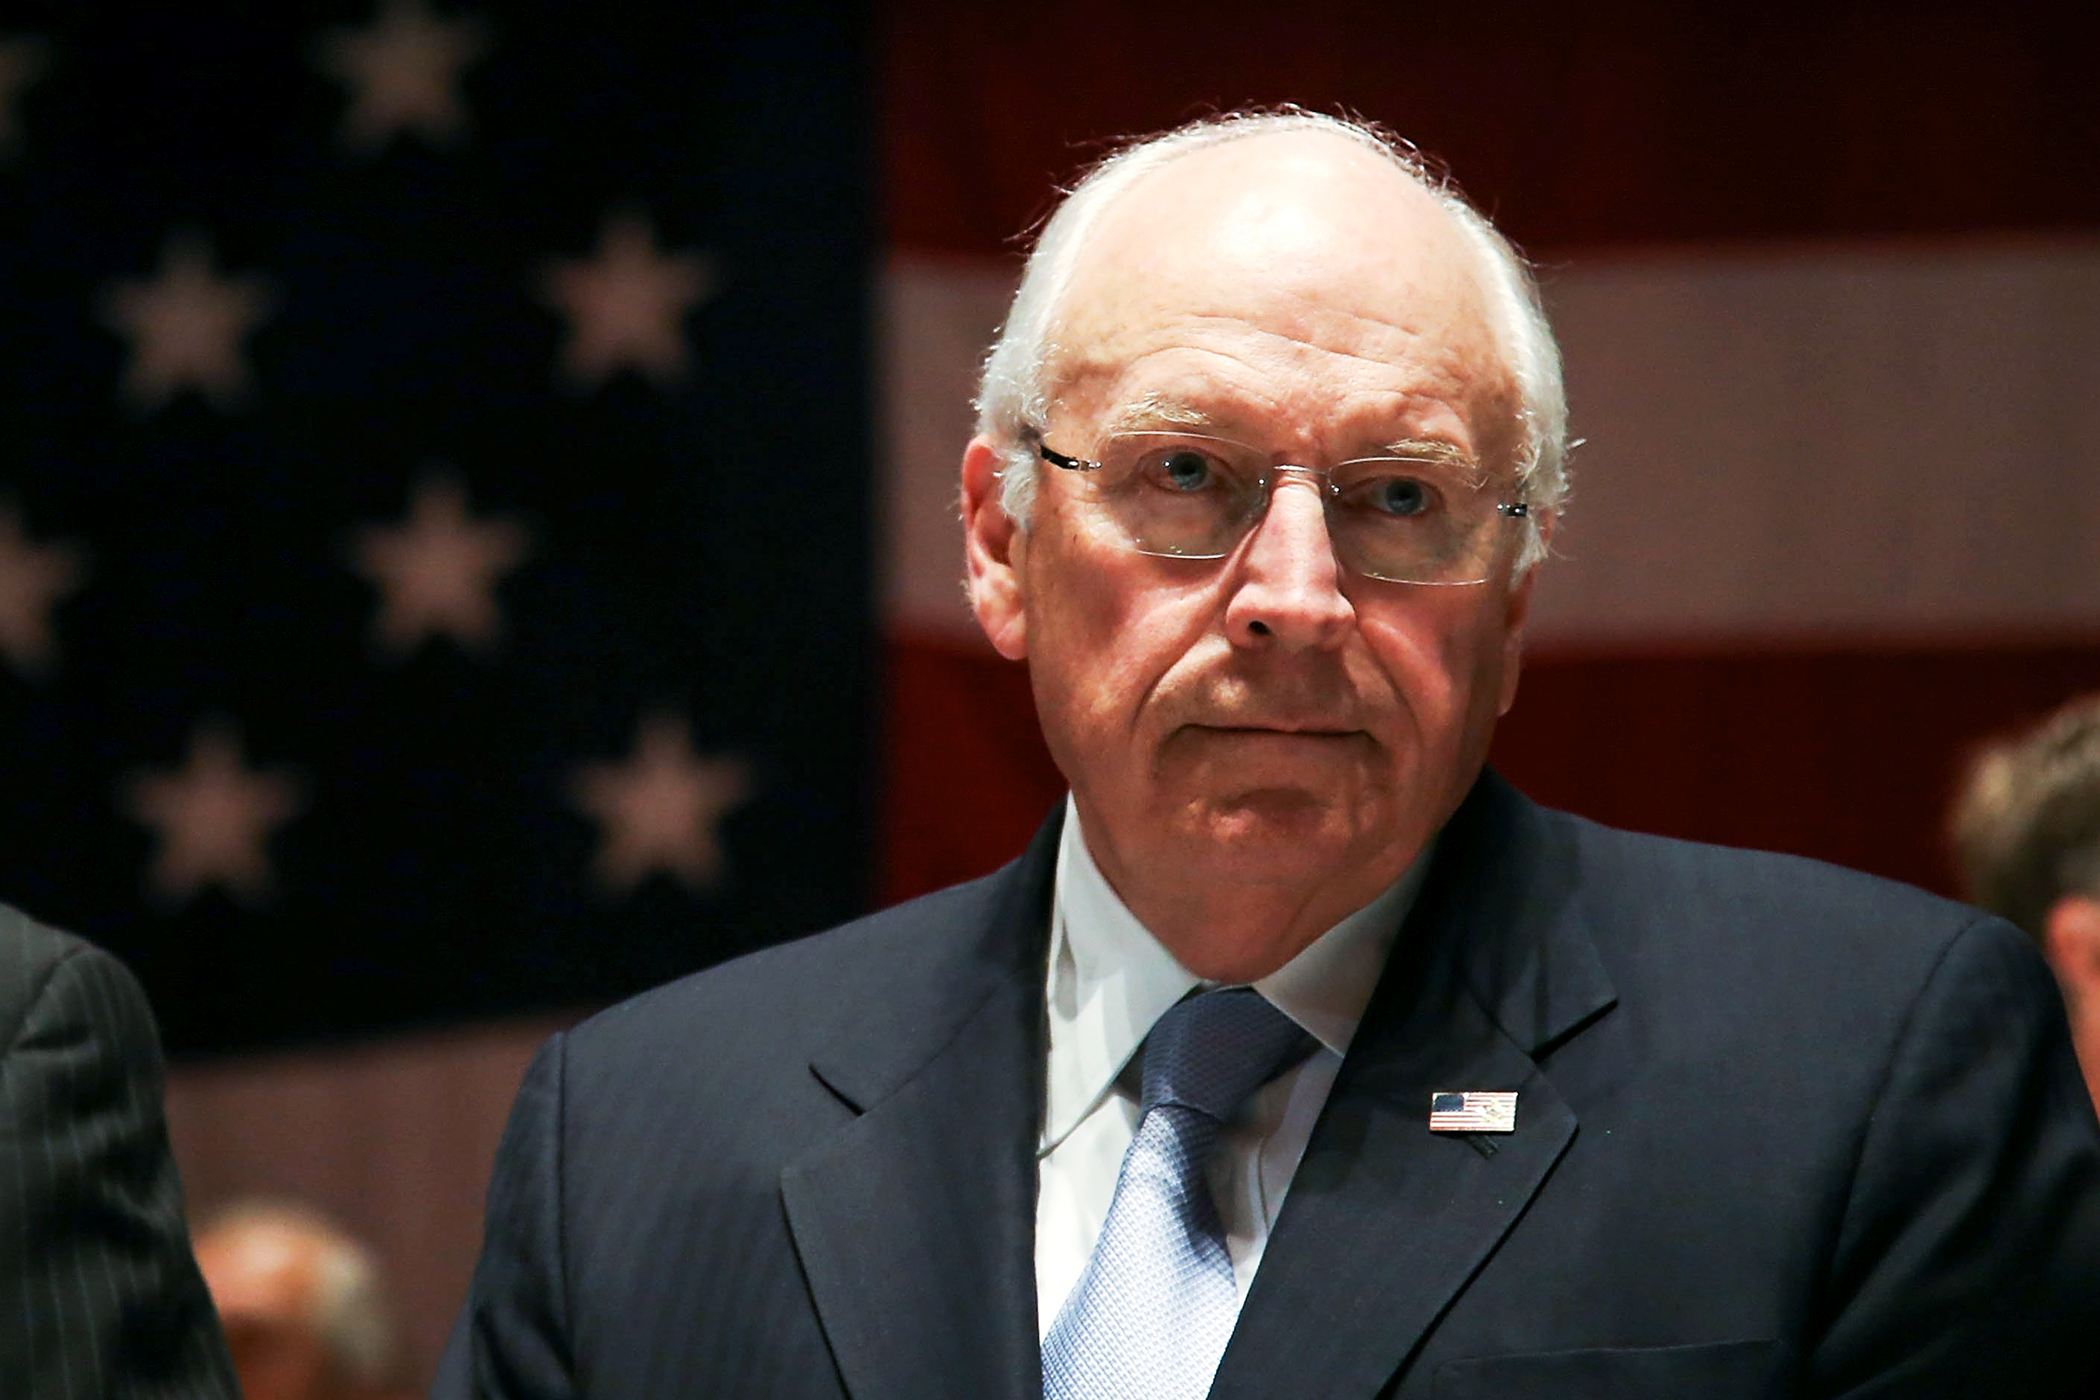 Dick Cheney picks sides